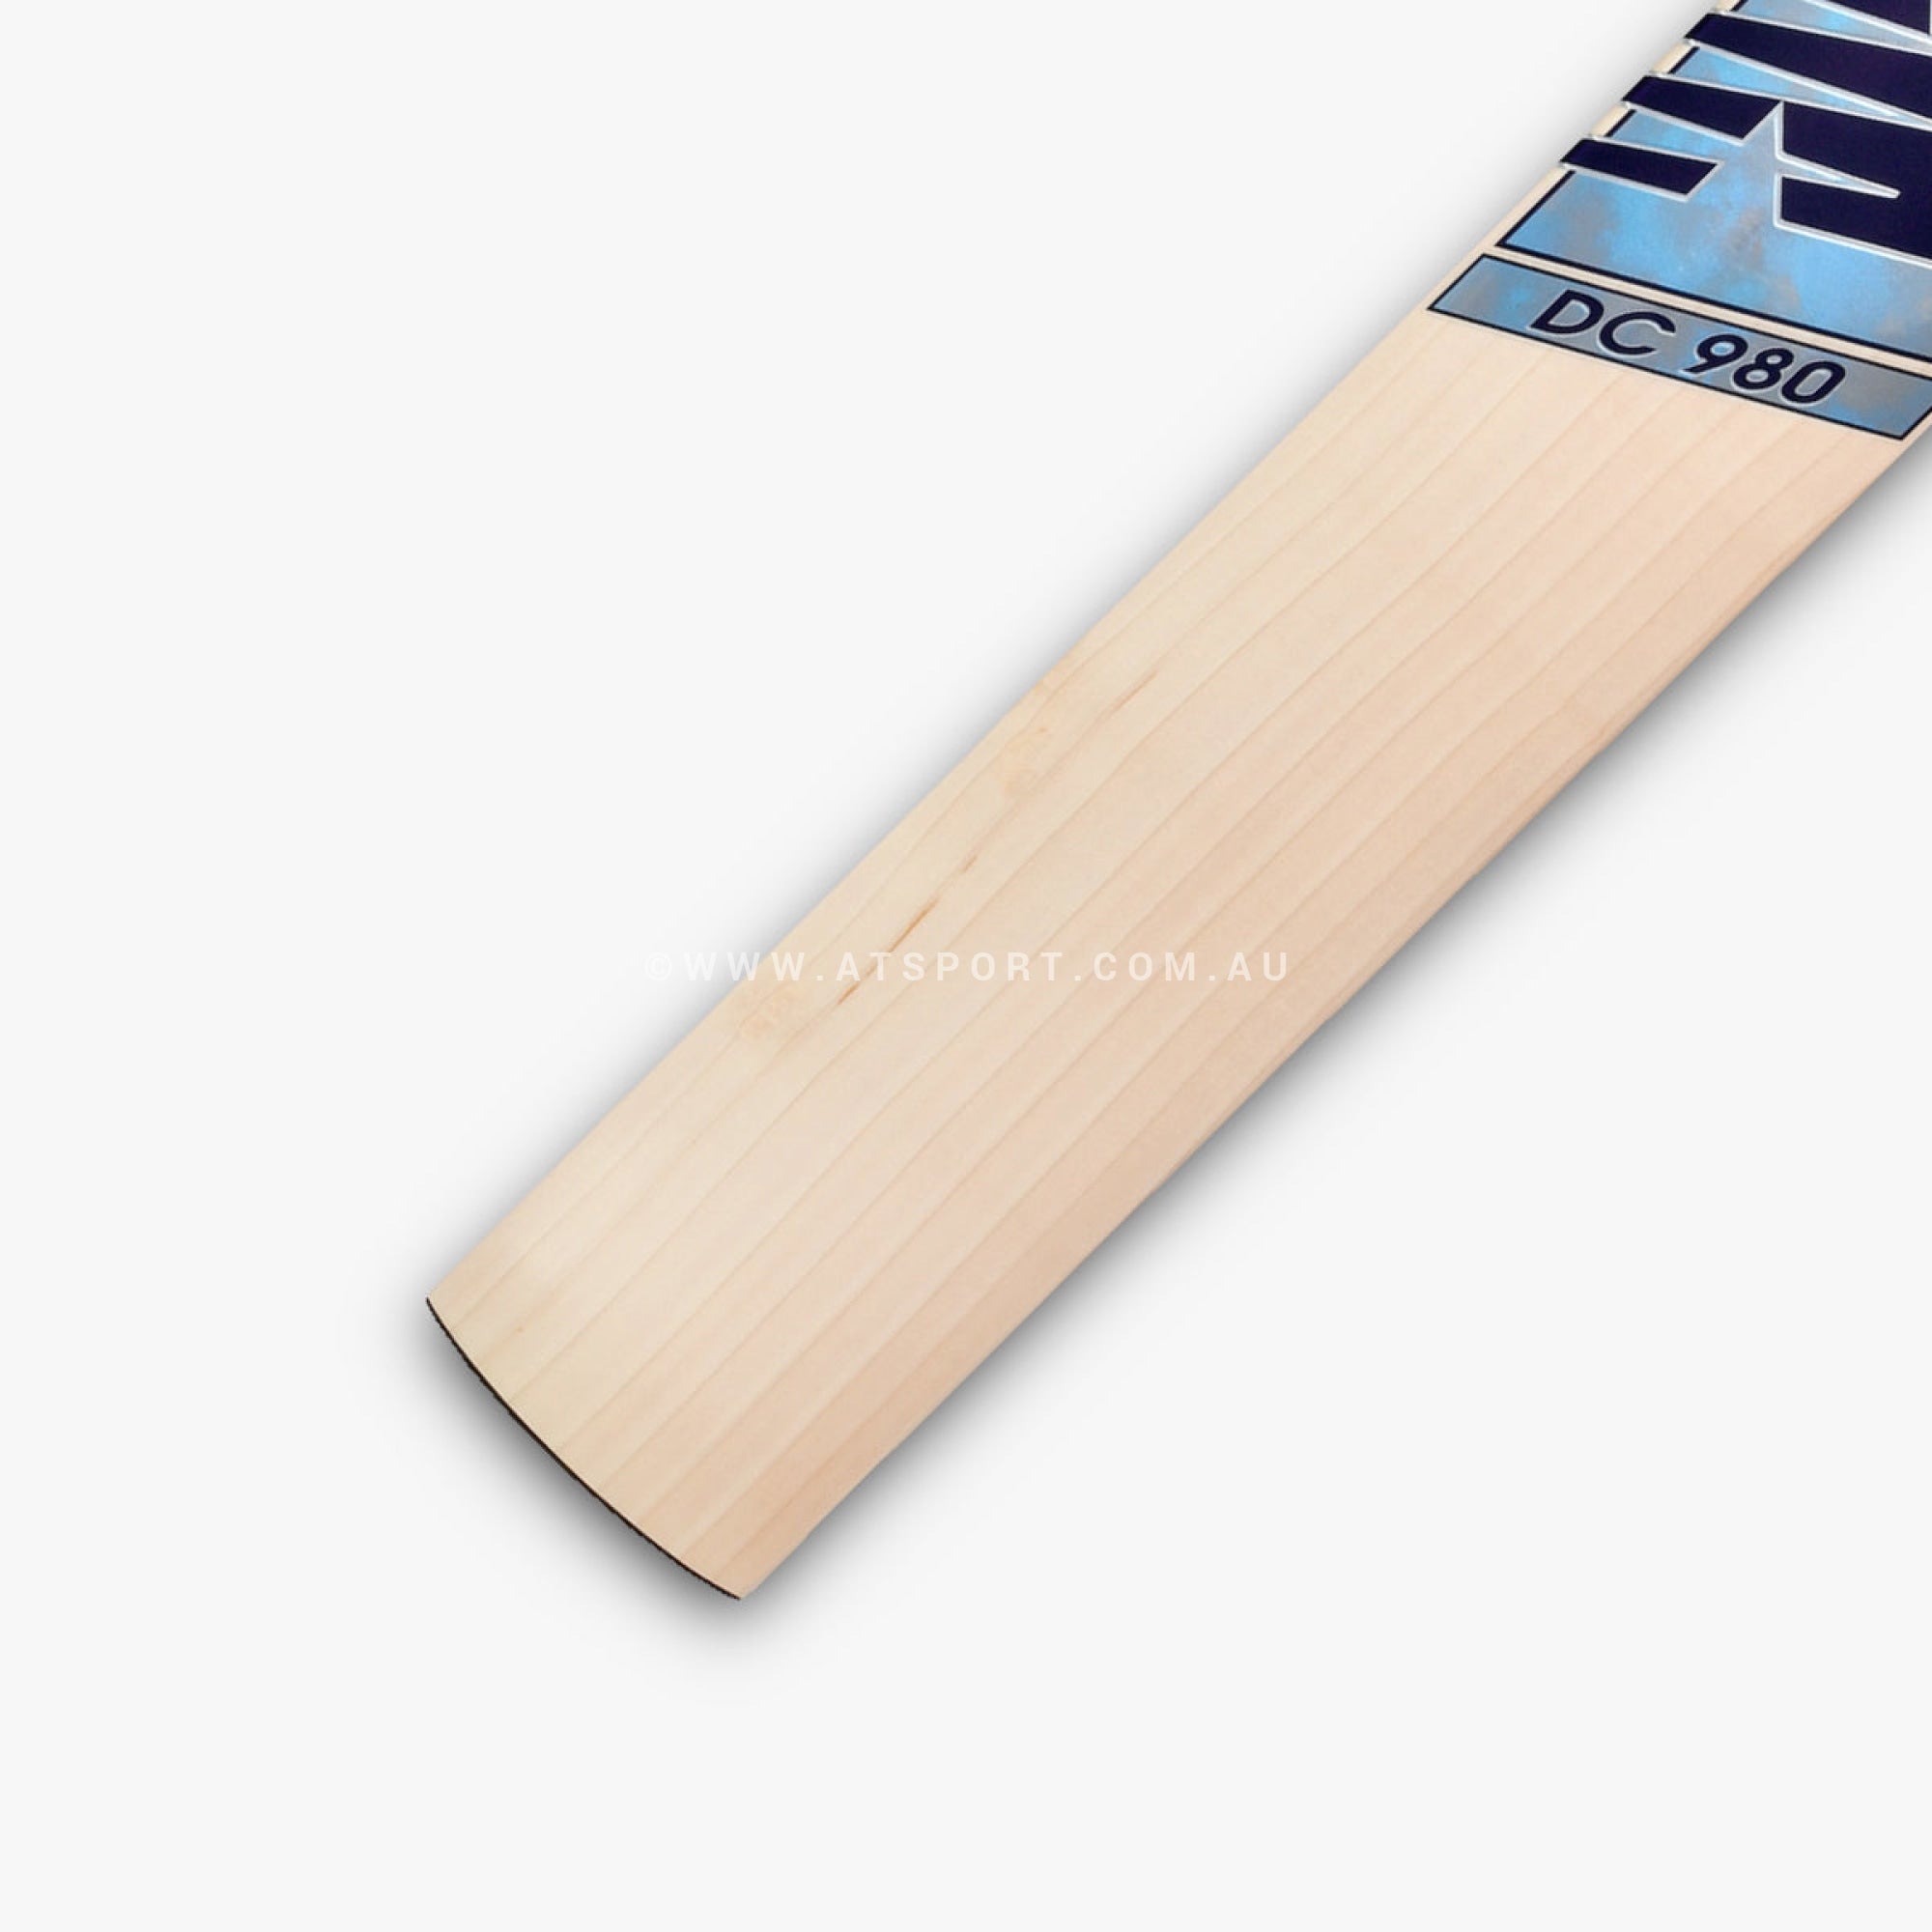 New Balance Dc 980 English Willow Cricket Bat - Sh Grade 2